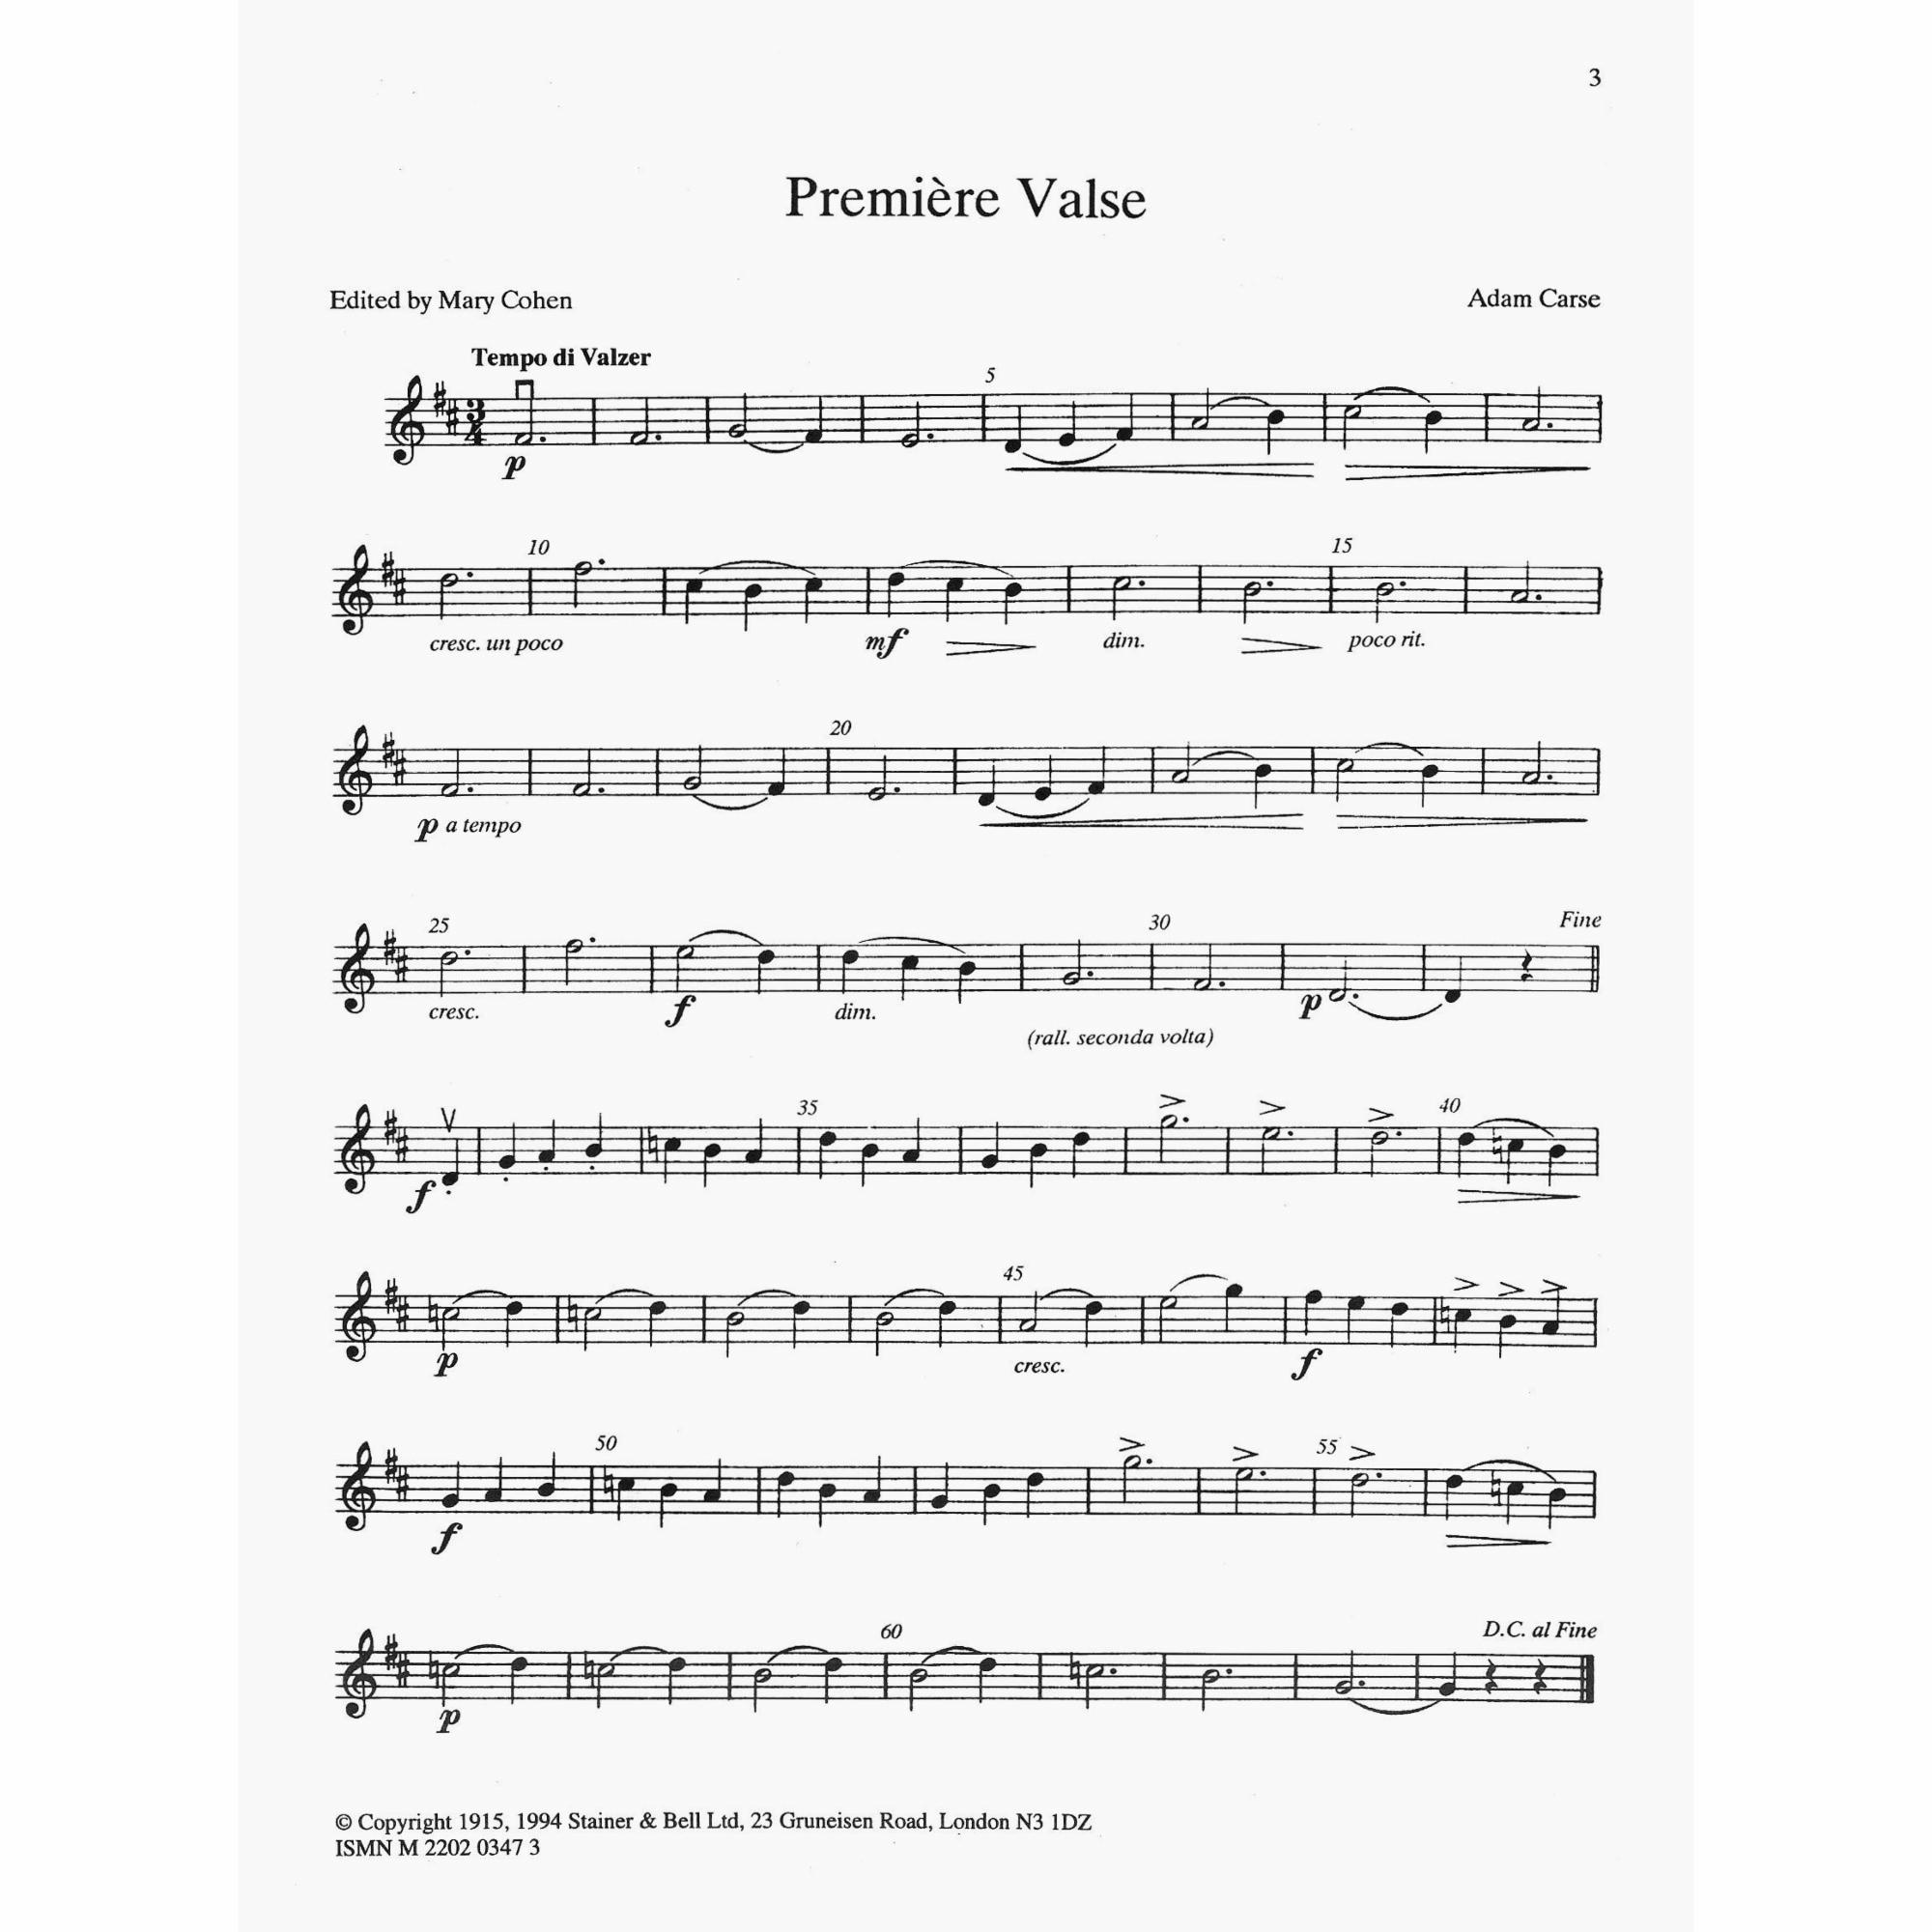 Sample: Book One, Violin Part